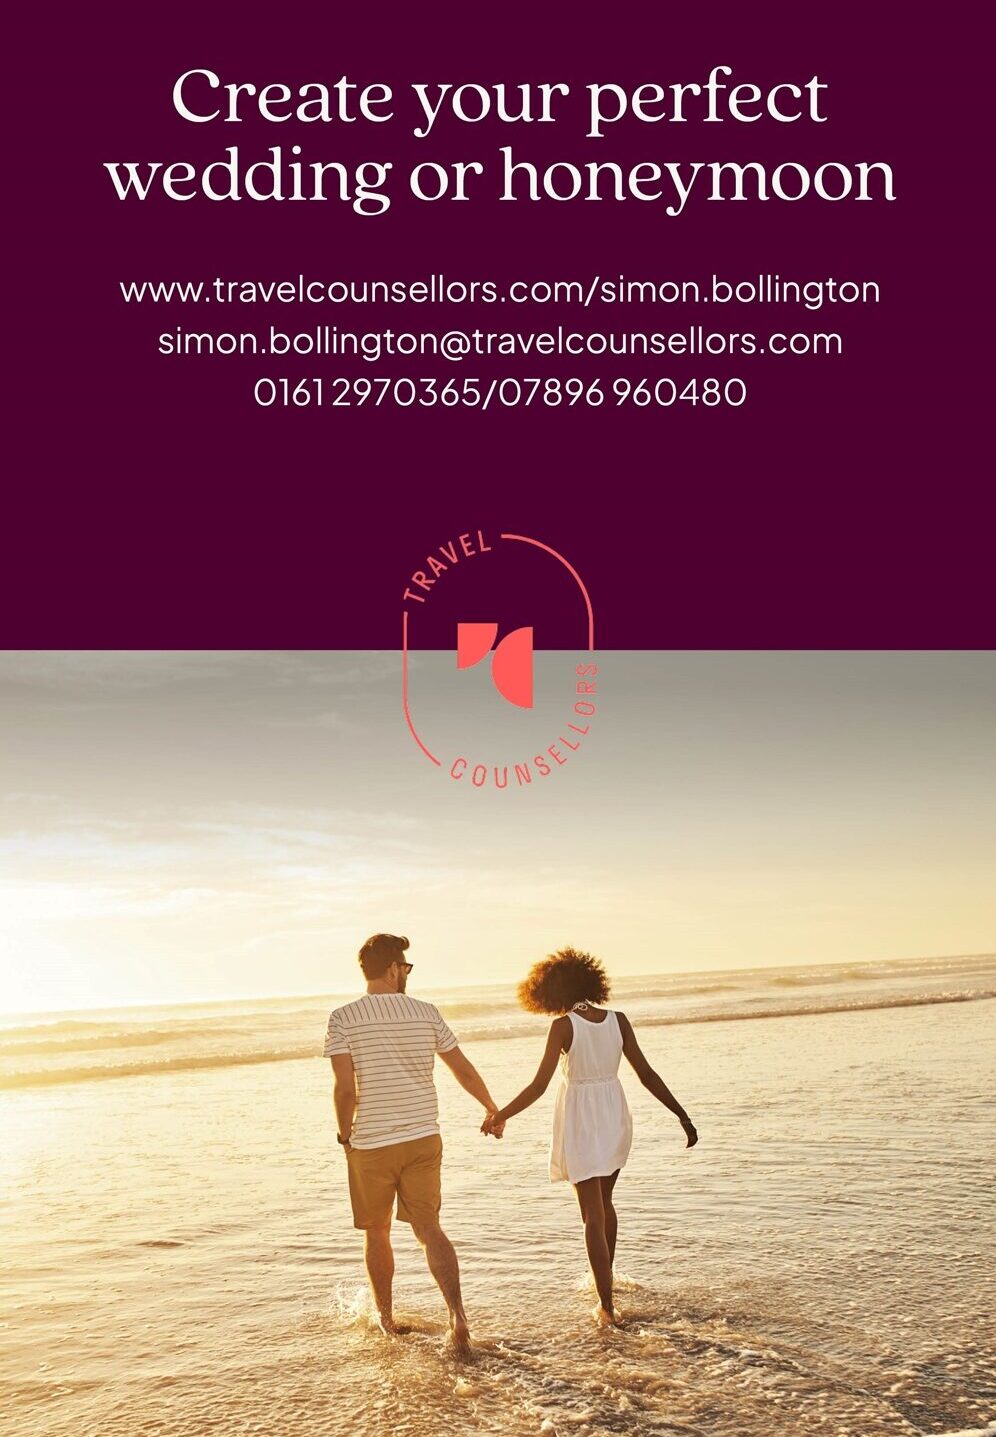 simon bollington travel counsellors